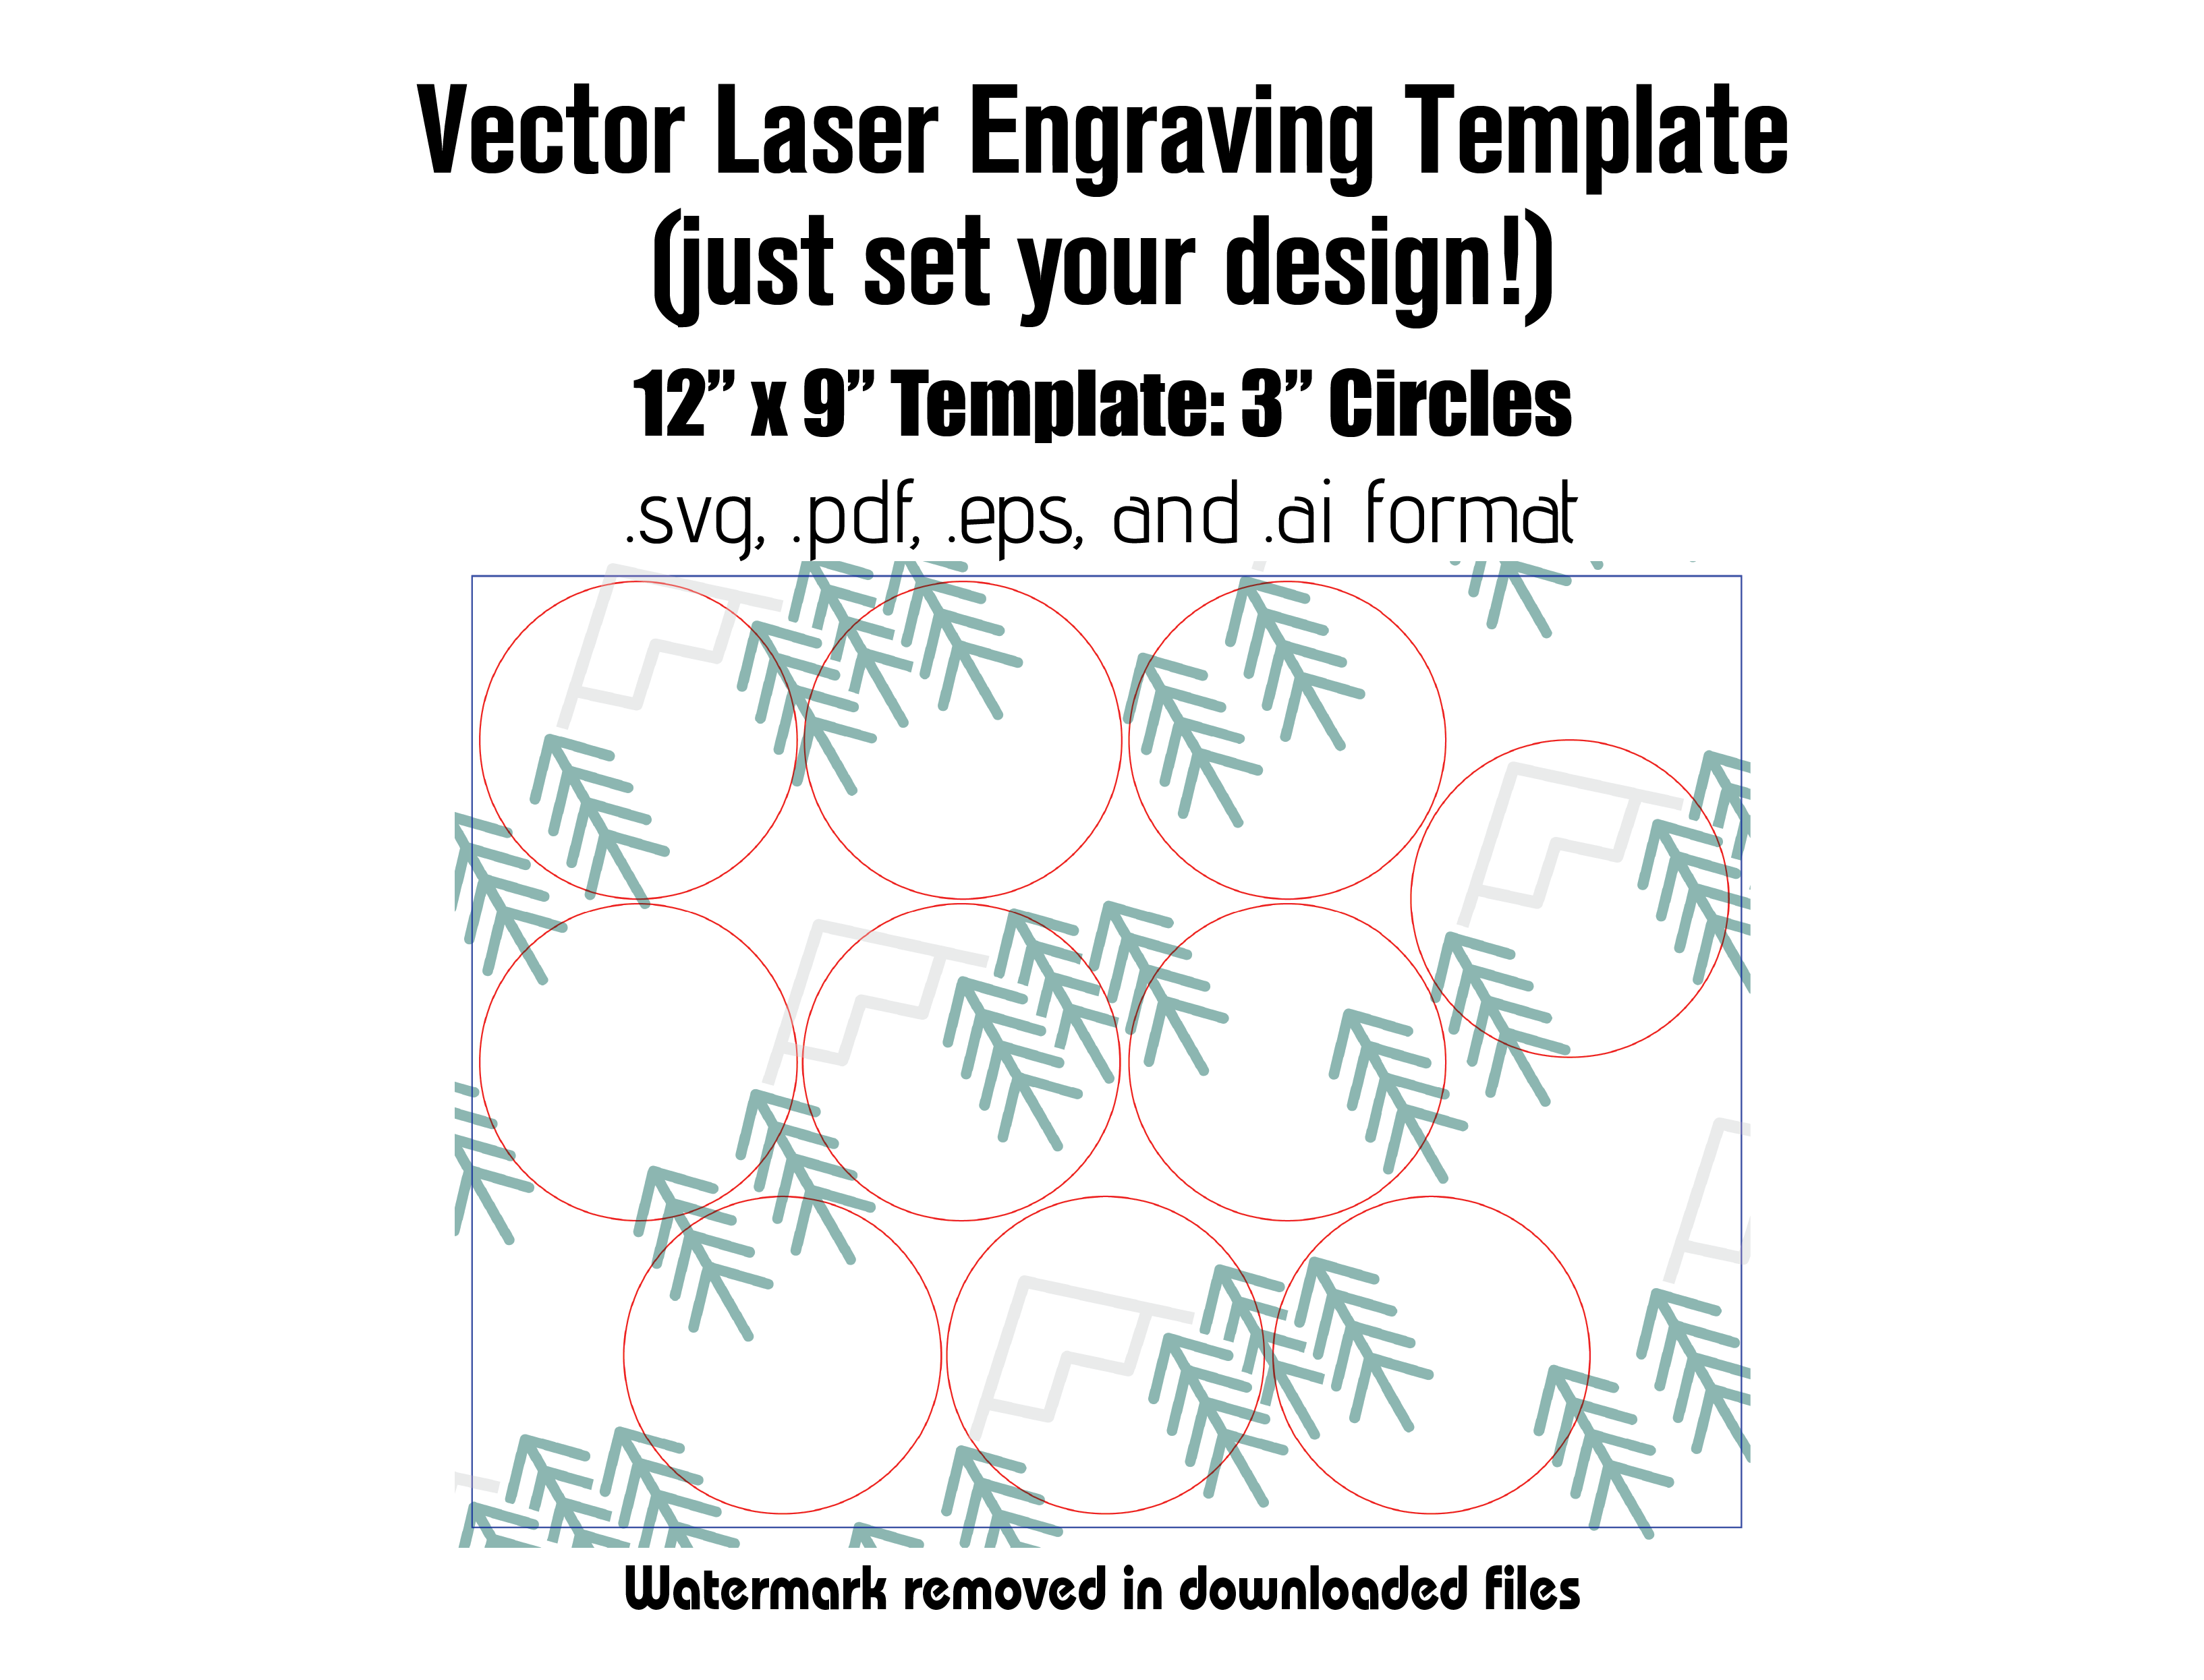 Digital Laser Cutting Template: 3" Circles - 12" x 9" Sheet Size Digital Laser Engraving Files Craftworks NW 